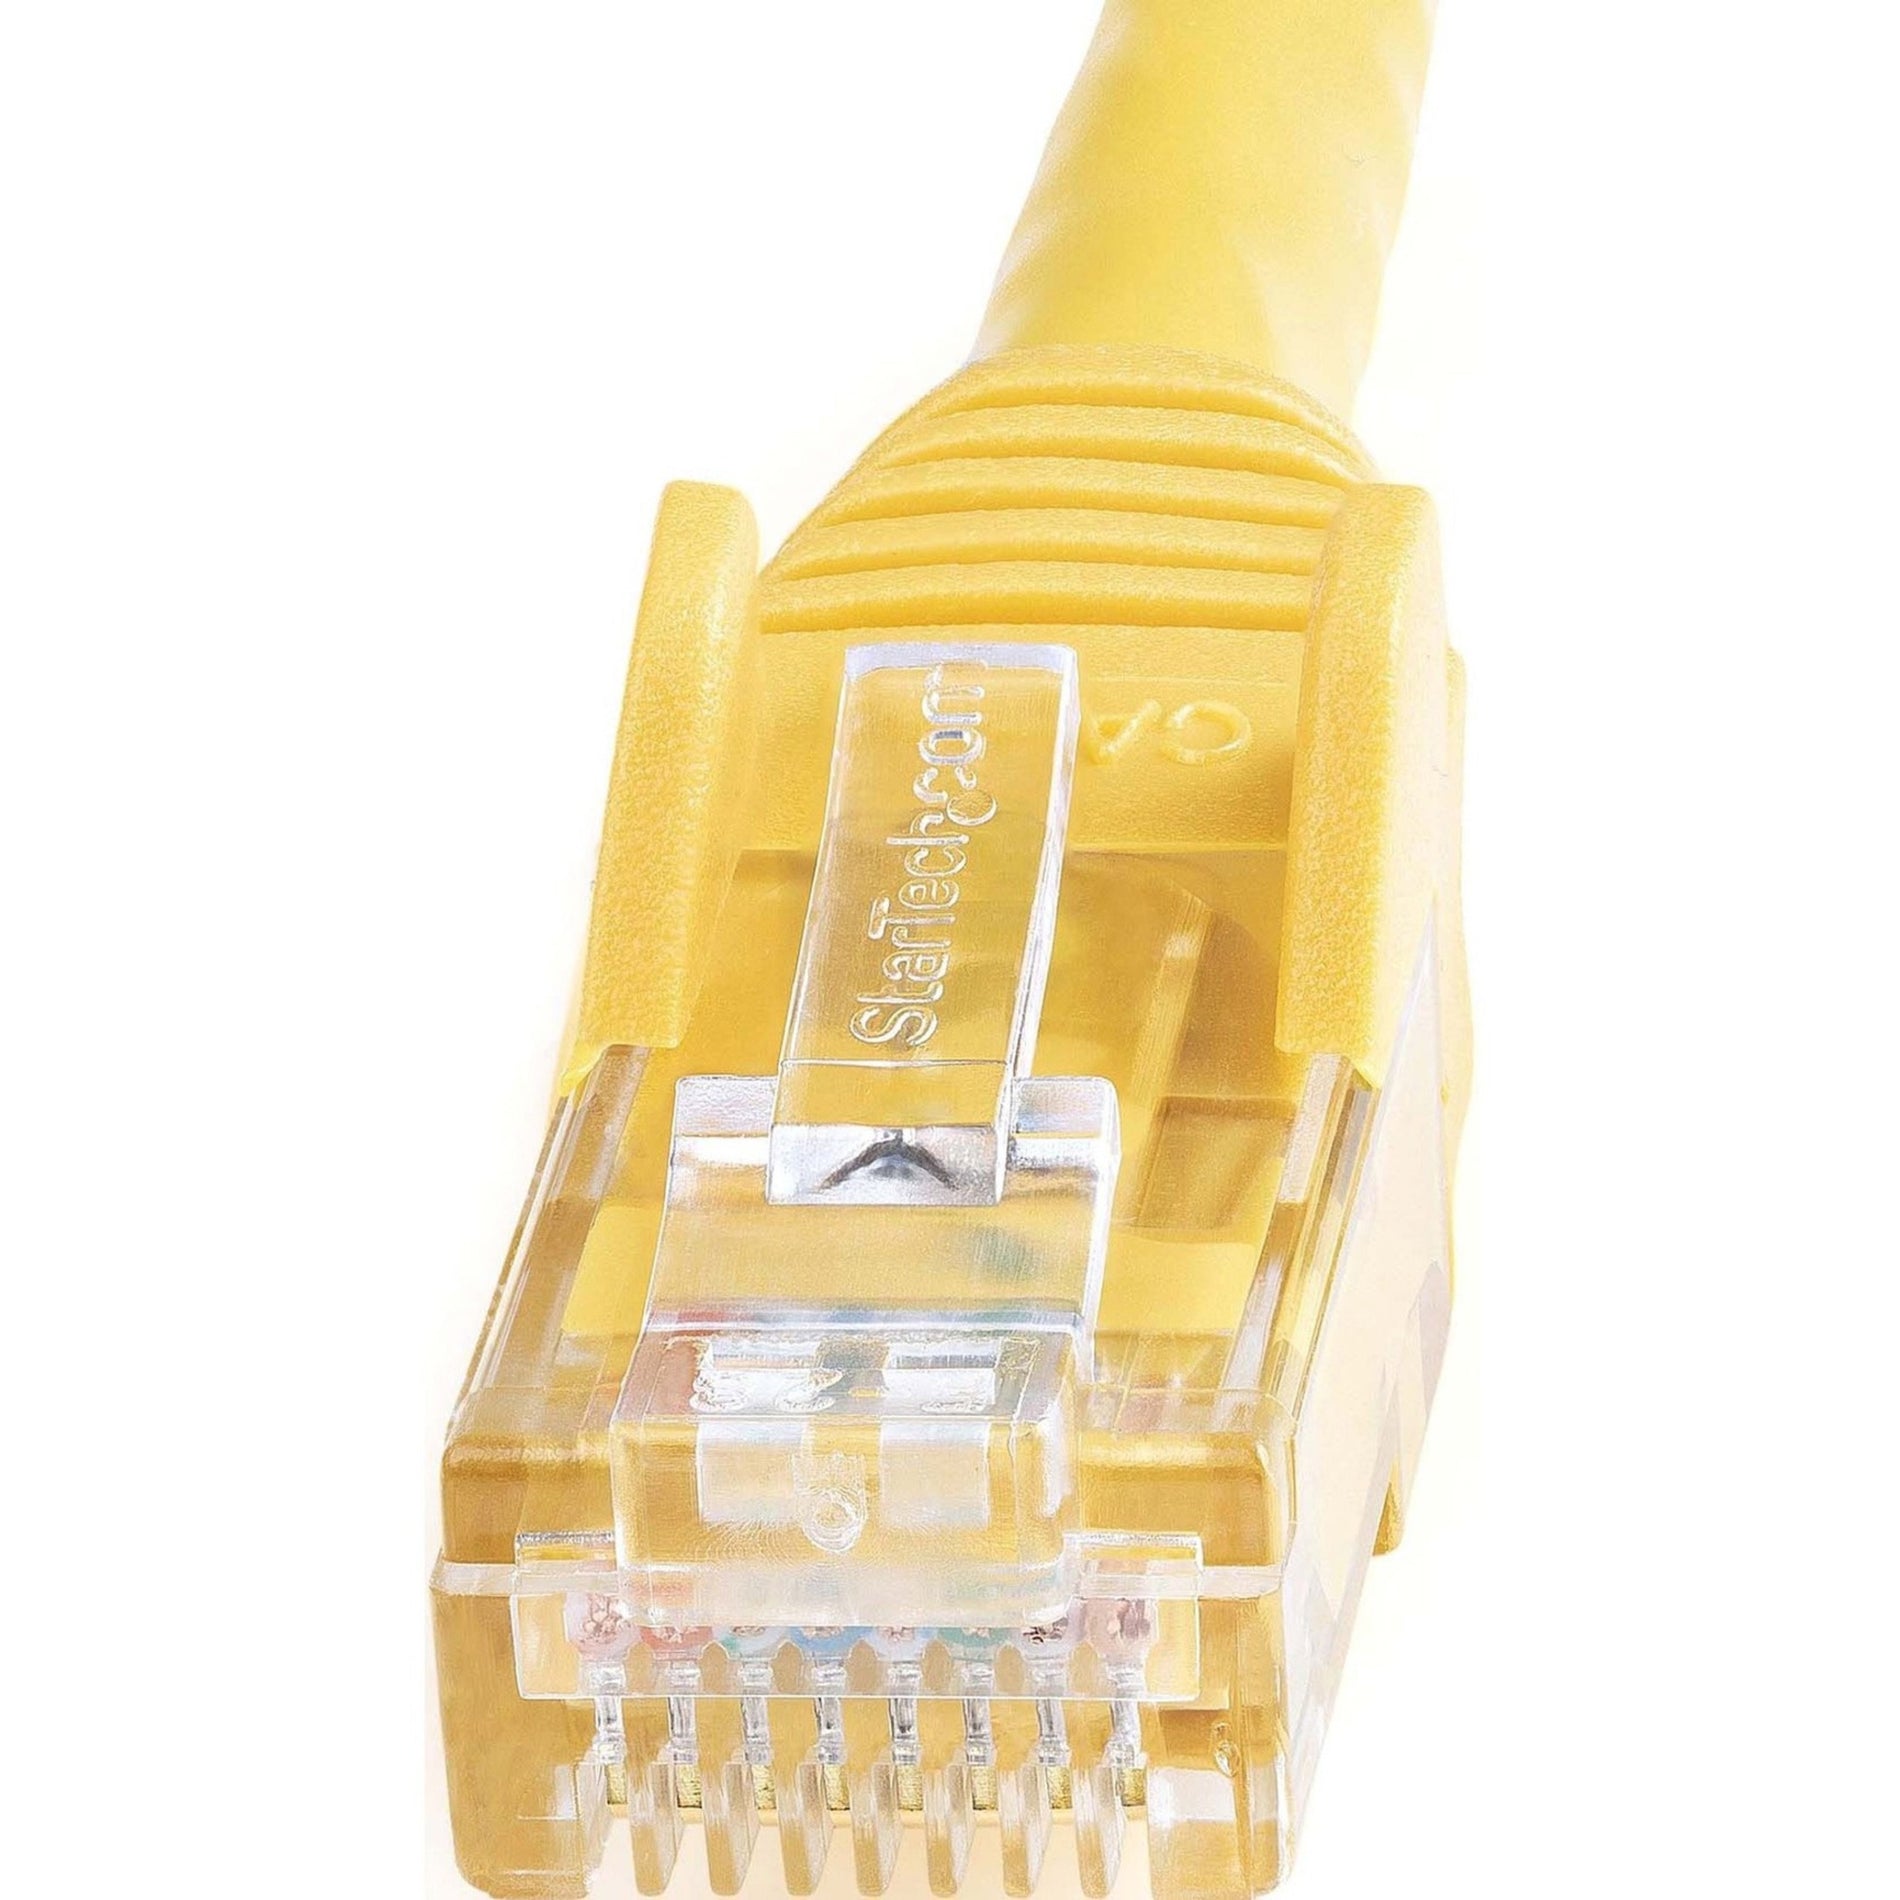 StarTech.com N6PATCH9YL Cable de conexión Cat6 9 pies Cable Ethernet amarillo con conectores RJ45 sin enganches.